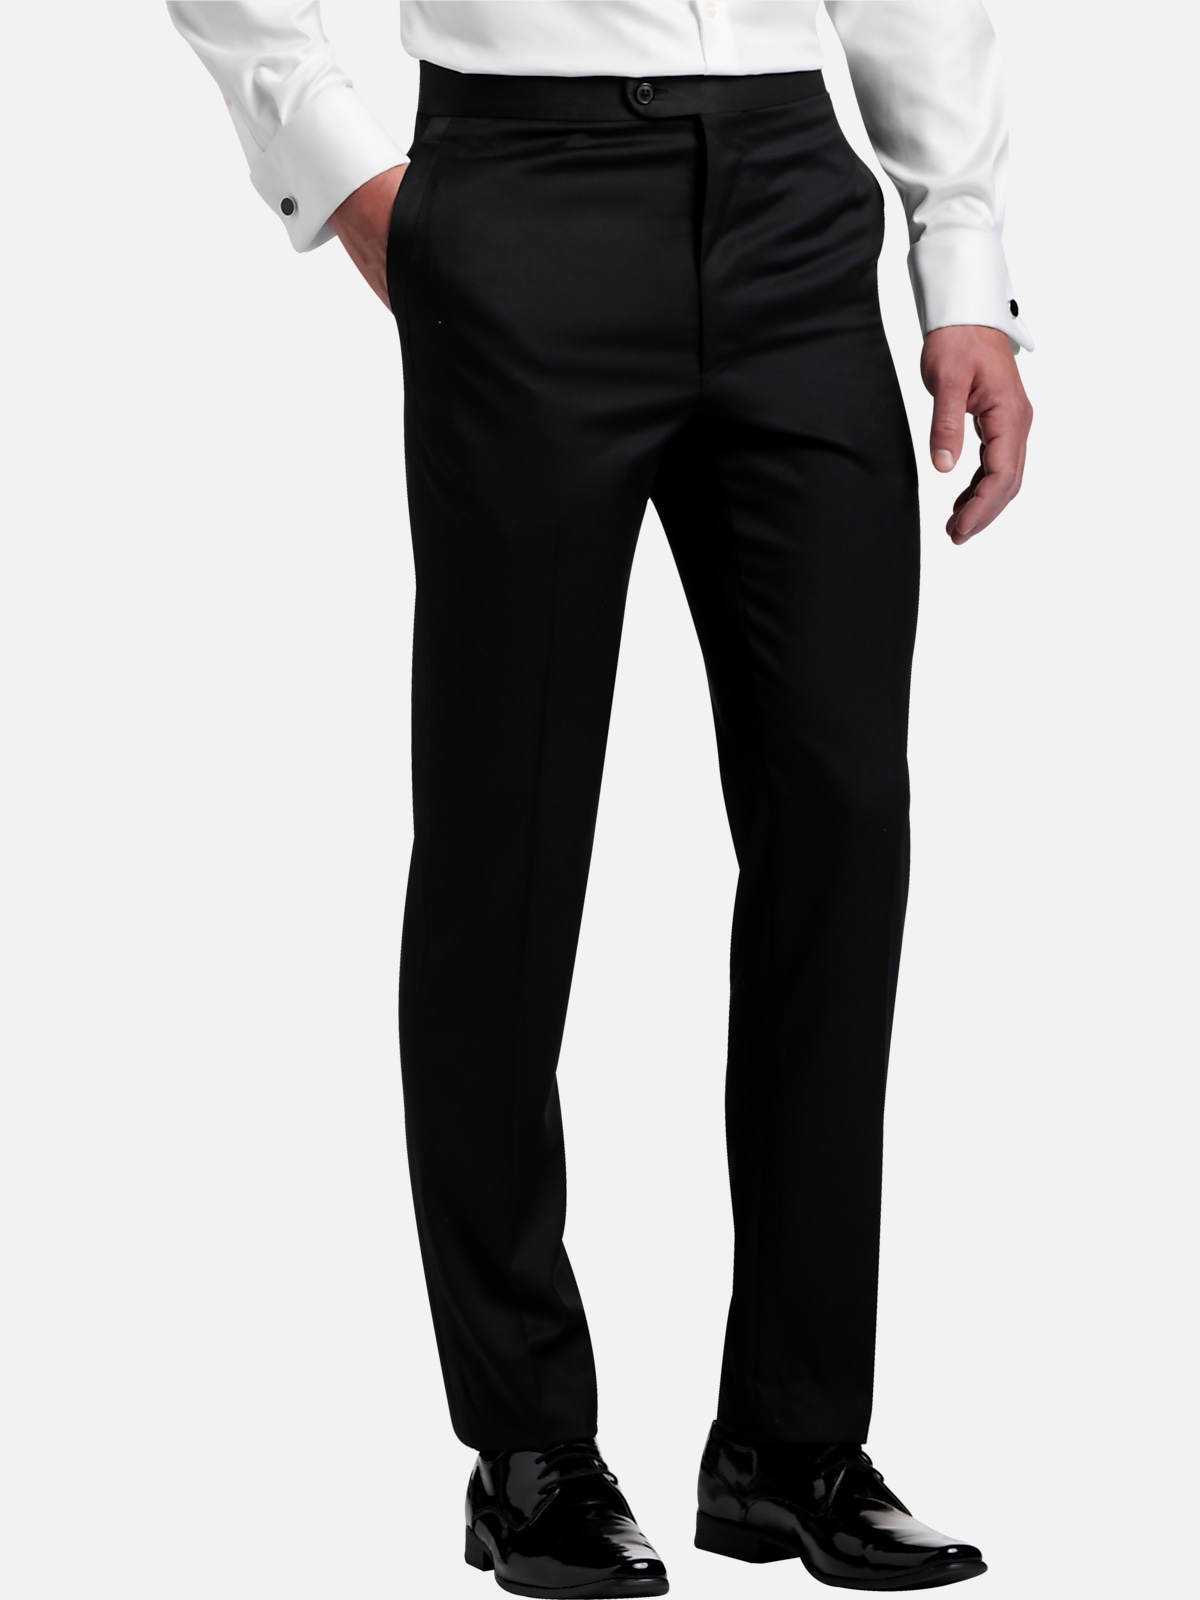 Joseph Abboud Modern Fit Suit Separates Tuxedo Pants | All Clearance ...